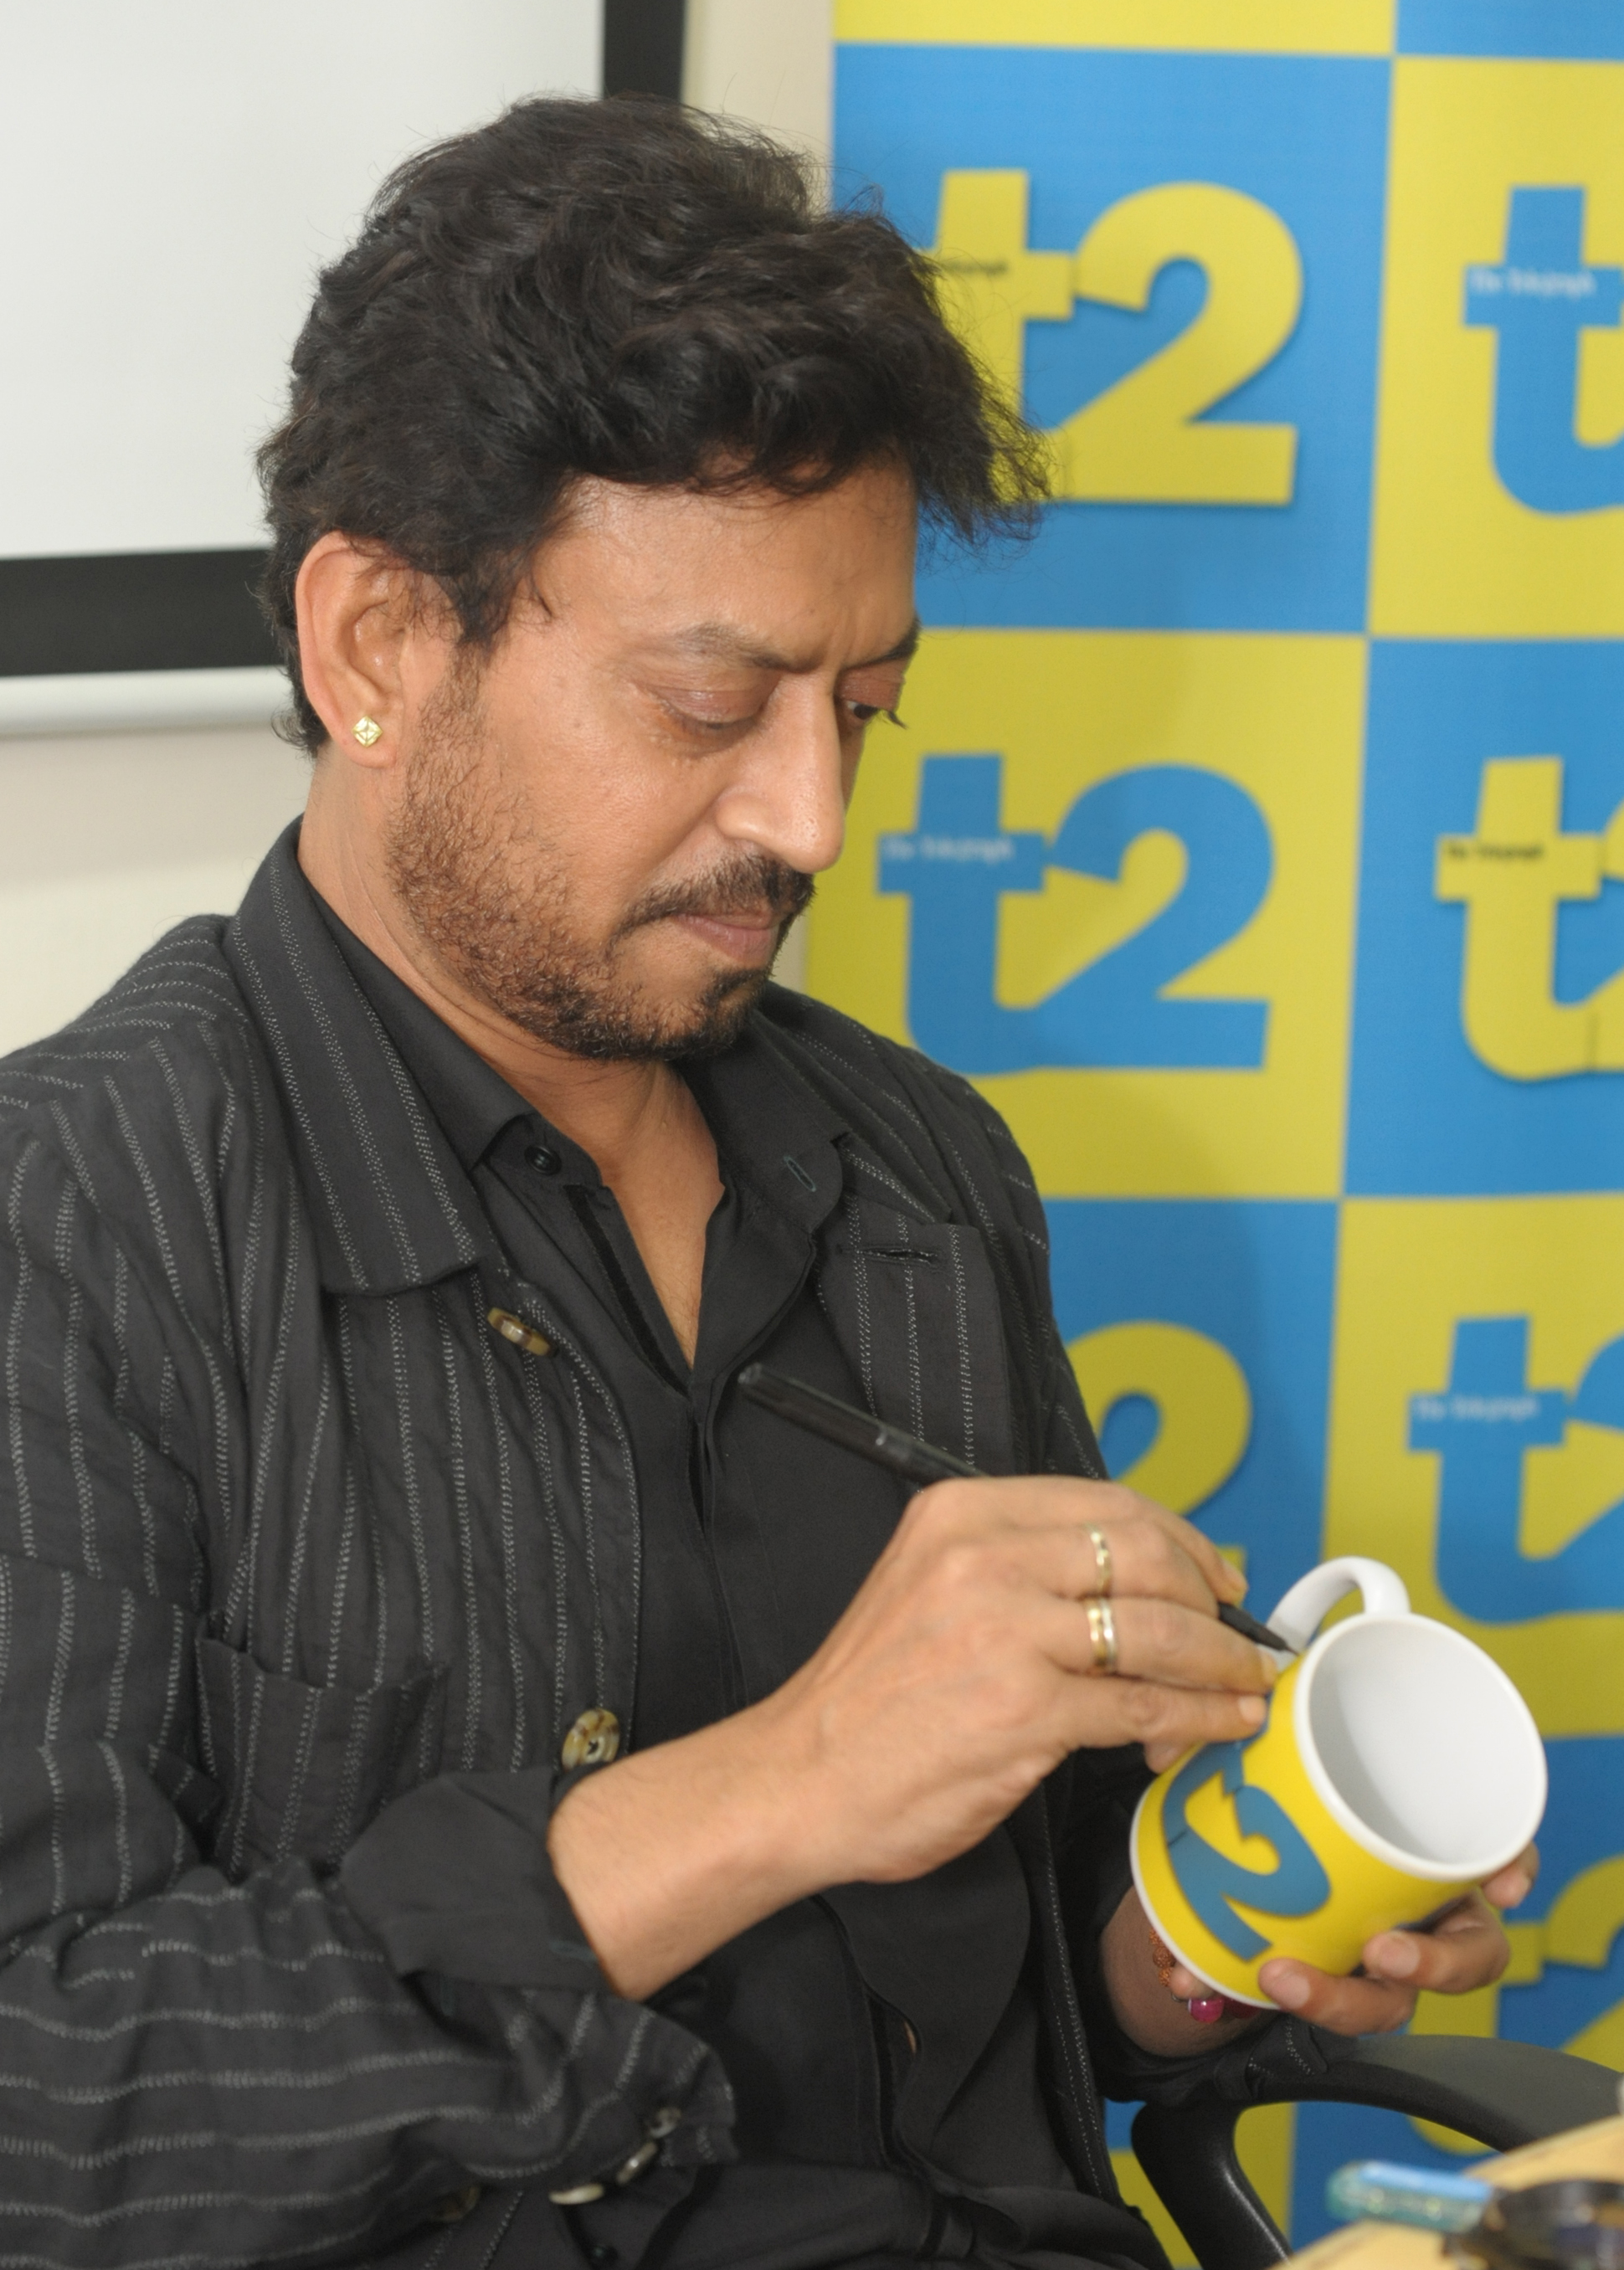 Irrfan Khan signing a t2 mug